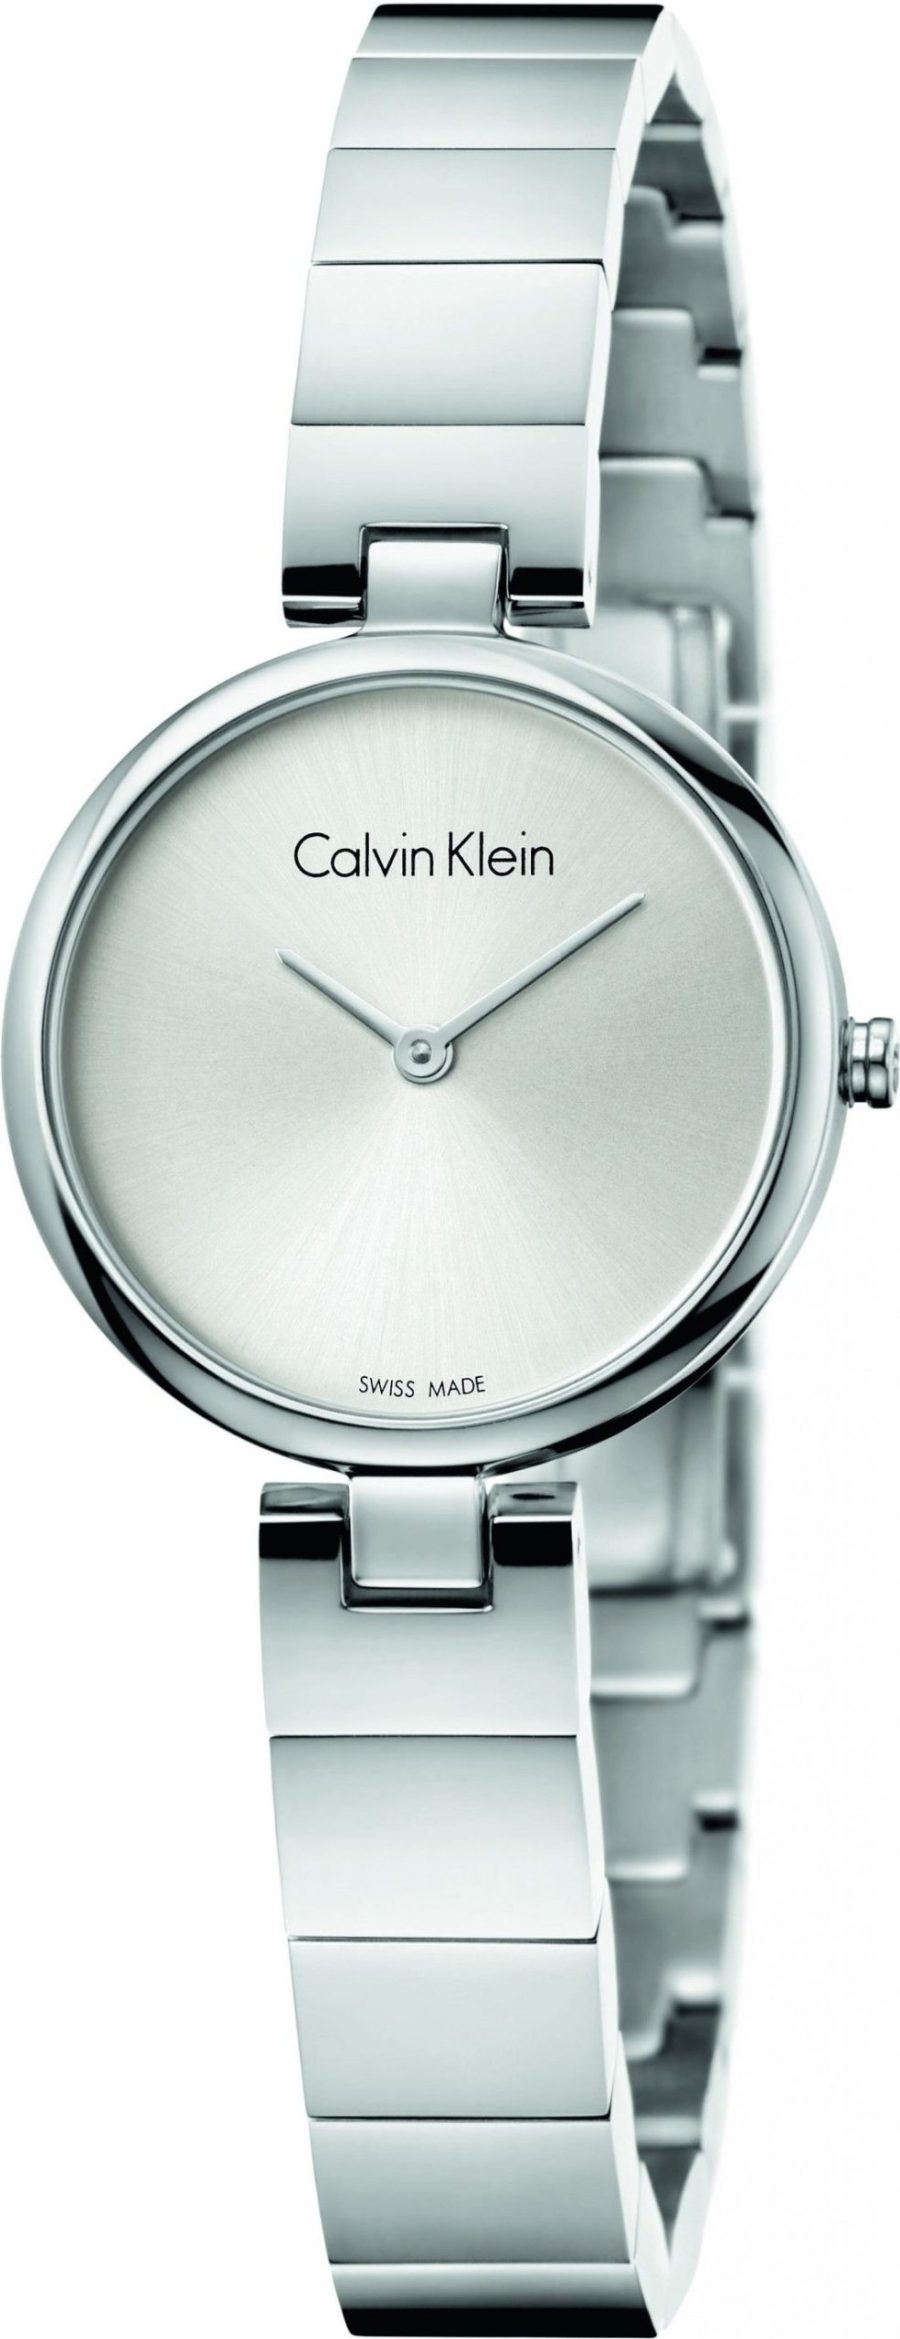 Hodinky CALVIN KLEIN model AUTHENTIC K8G23146